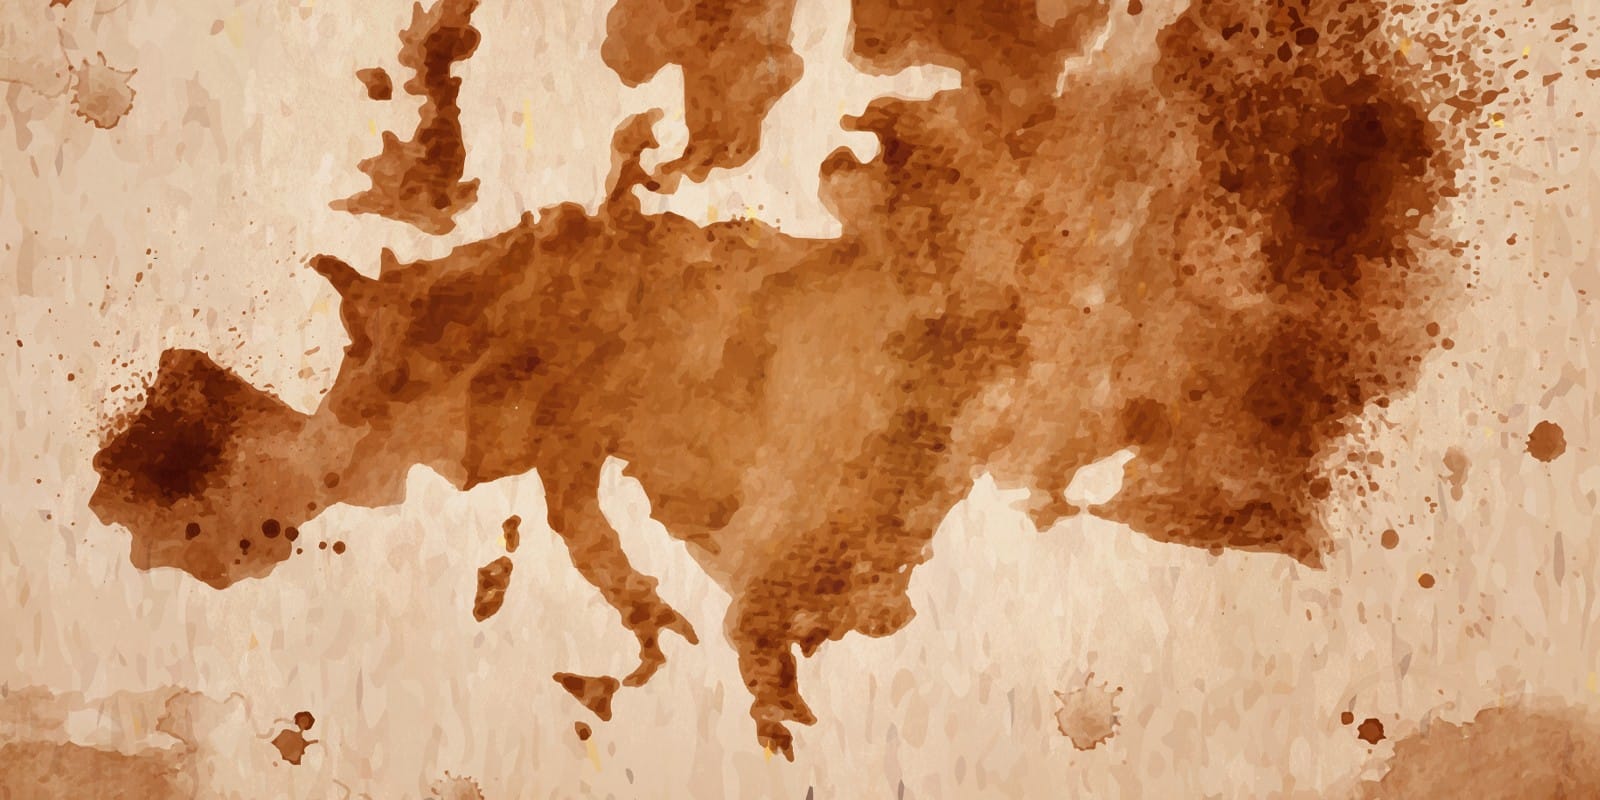 Europe map illustration